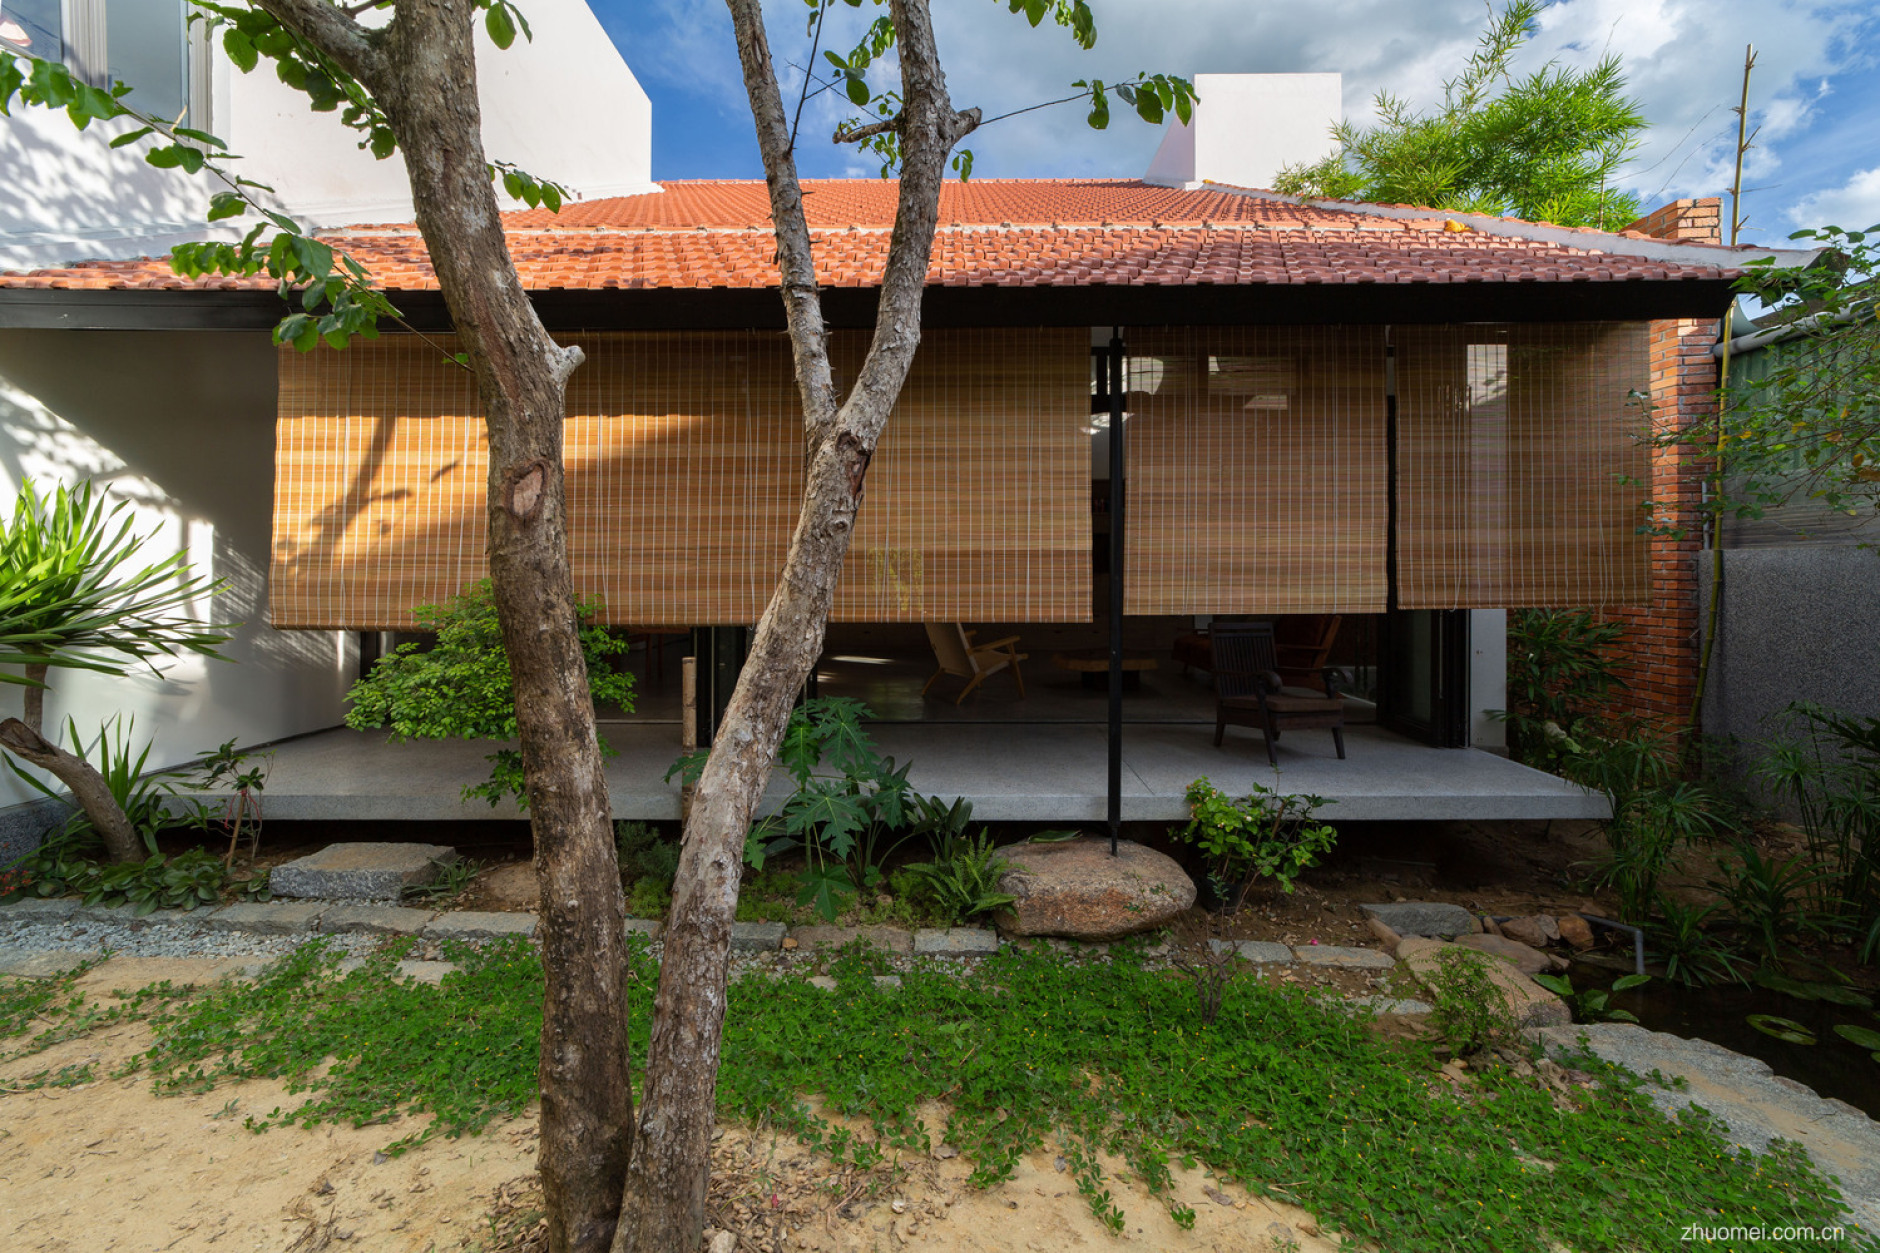 Dom Architect Studio丨The Tiamo House丨越南-53